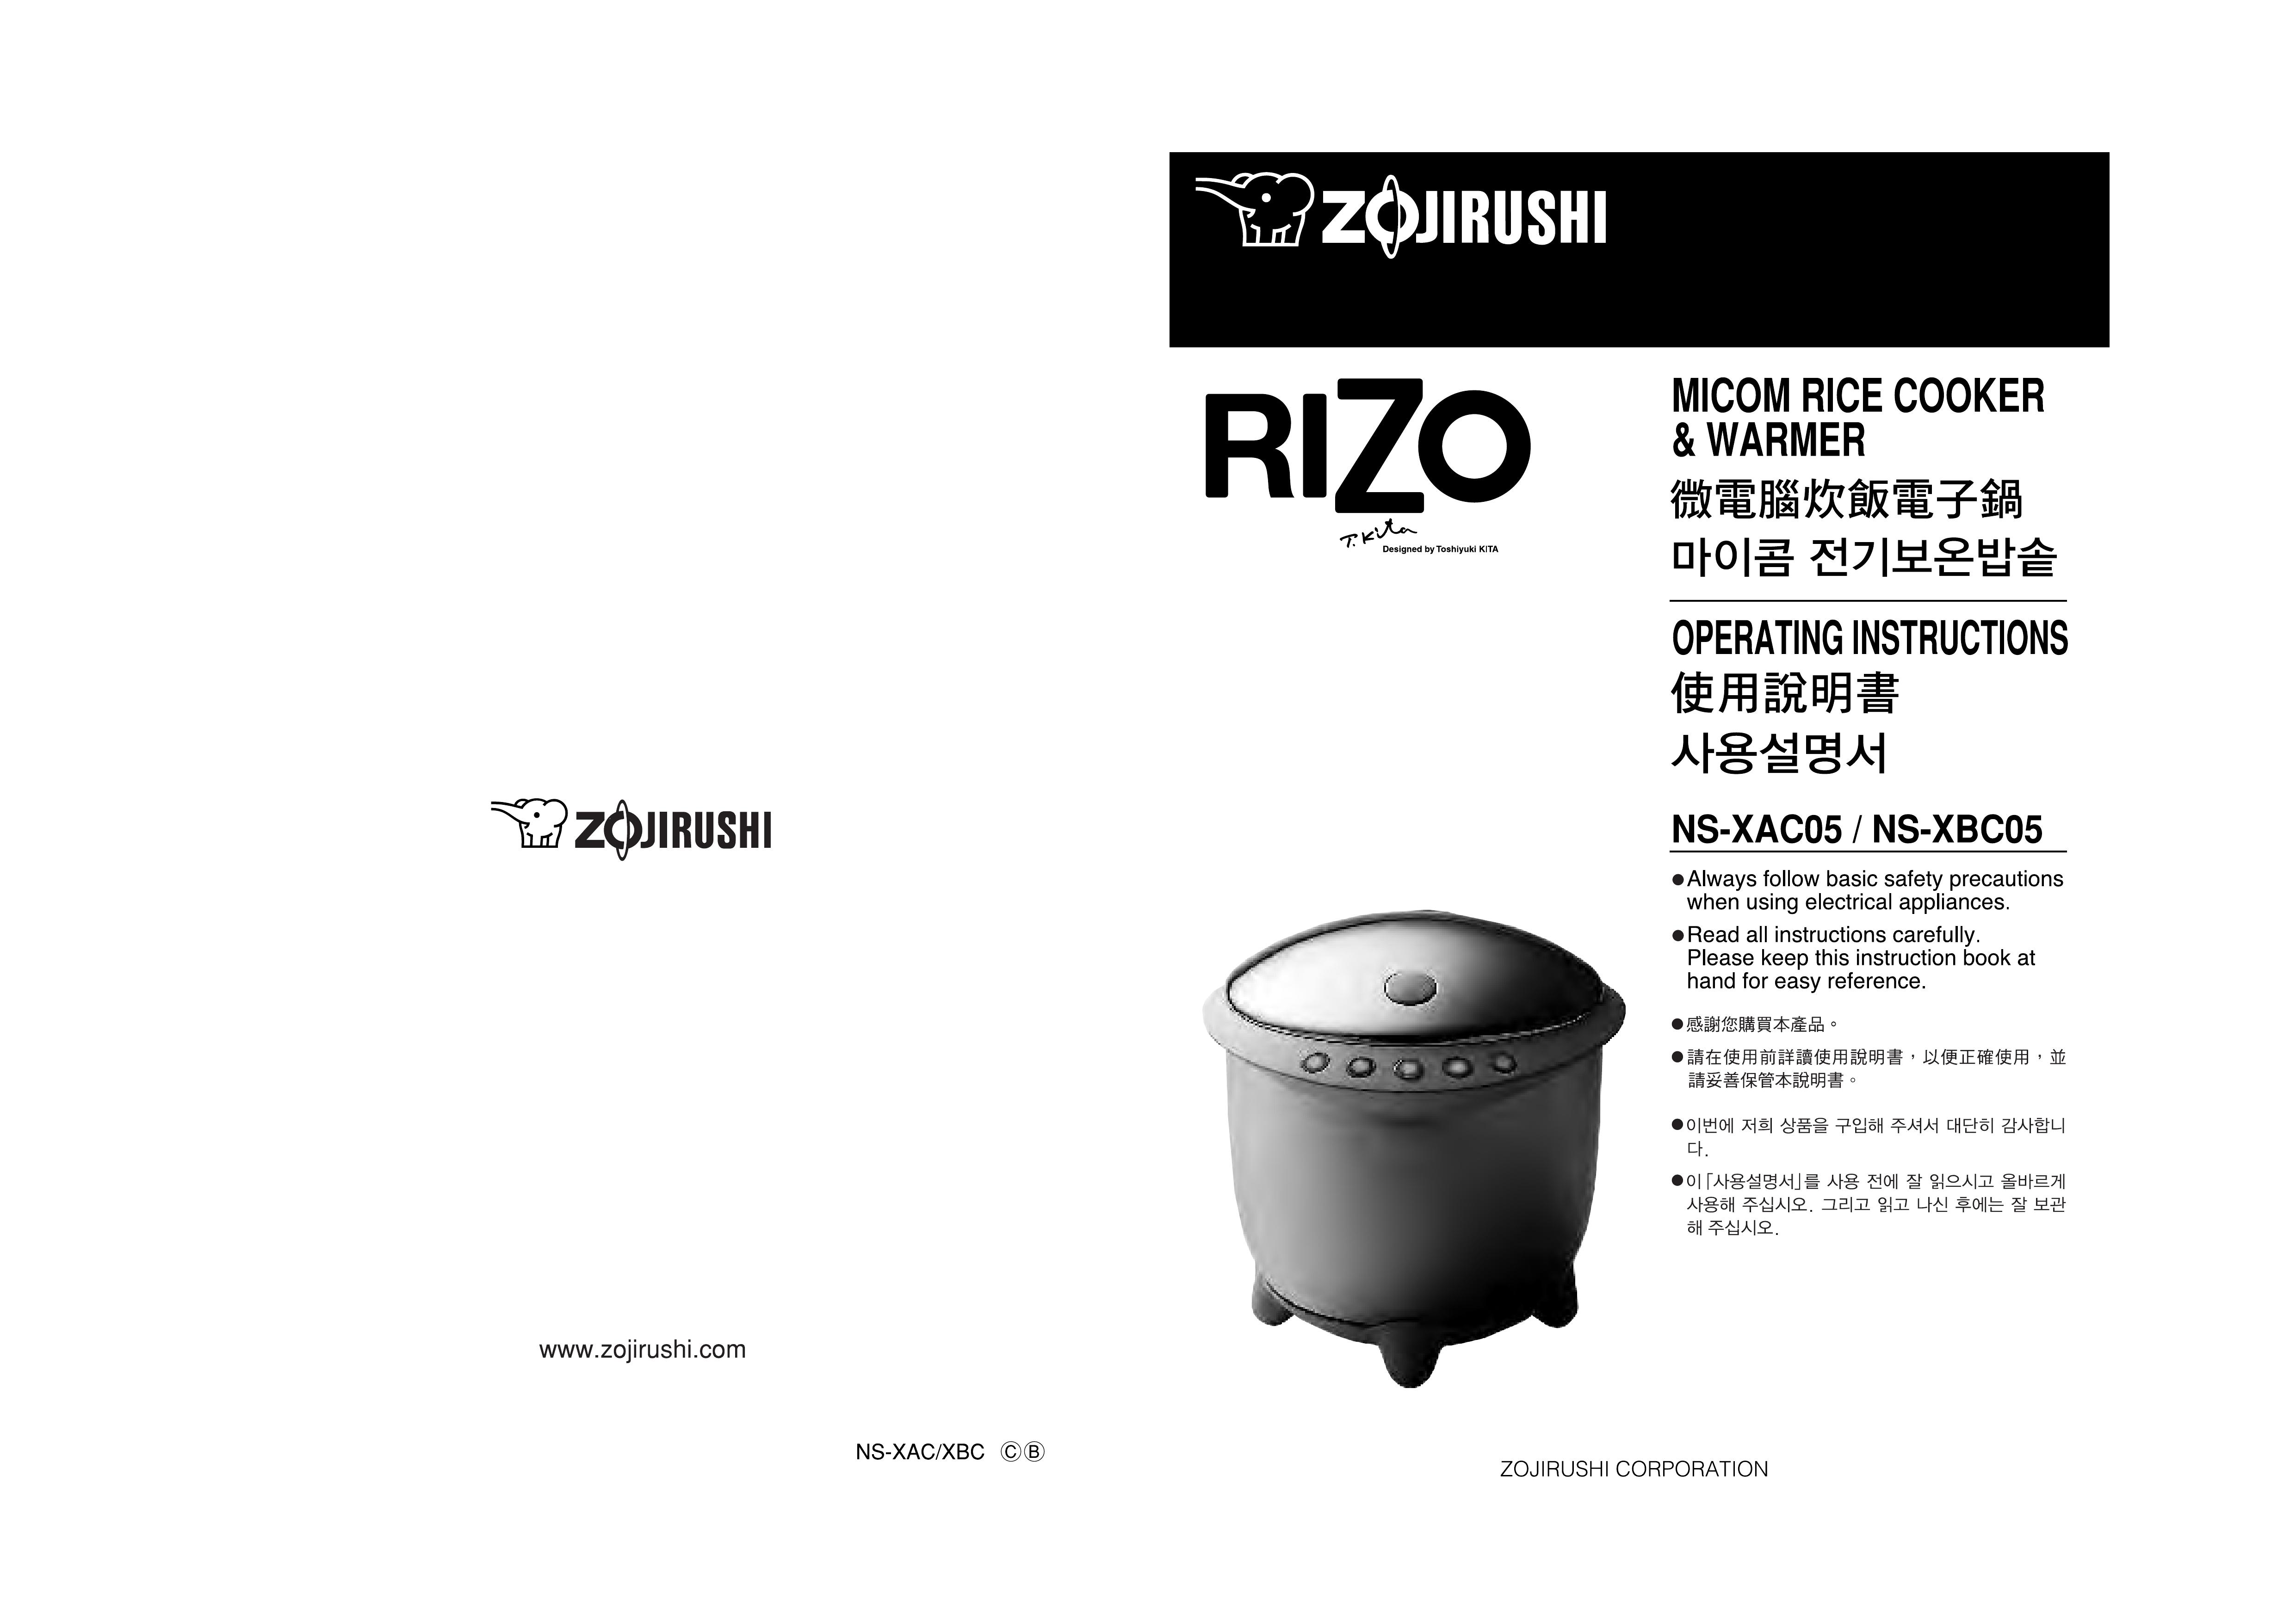 Zojirushi NS-XAC05 Rice Cooker User Manual